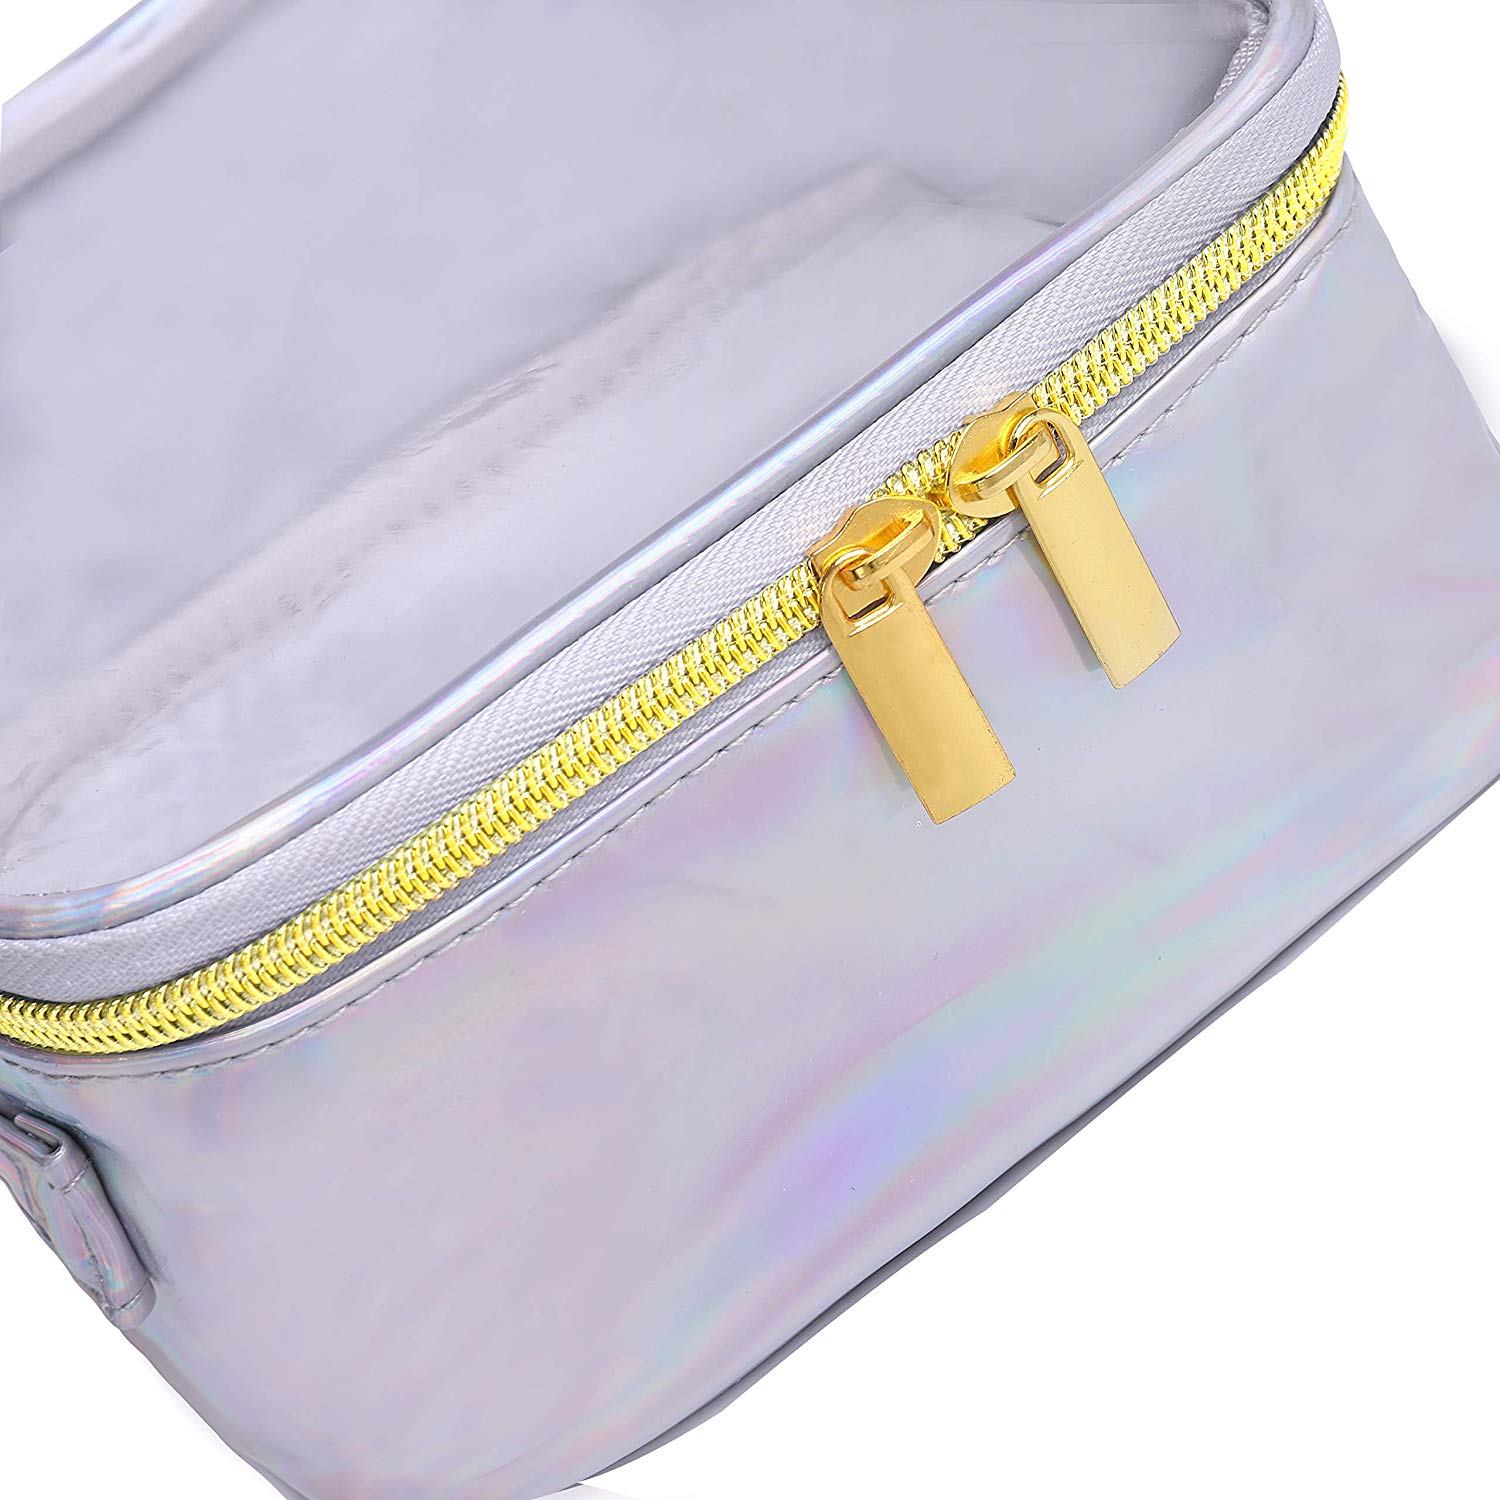 Lermende Travel Cosmetic Bag, Small Portable Makeup Brushes